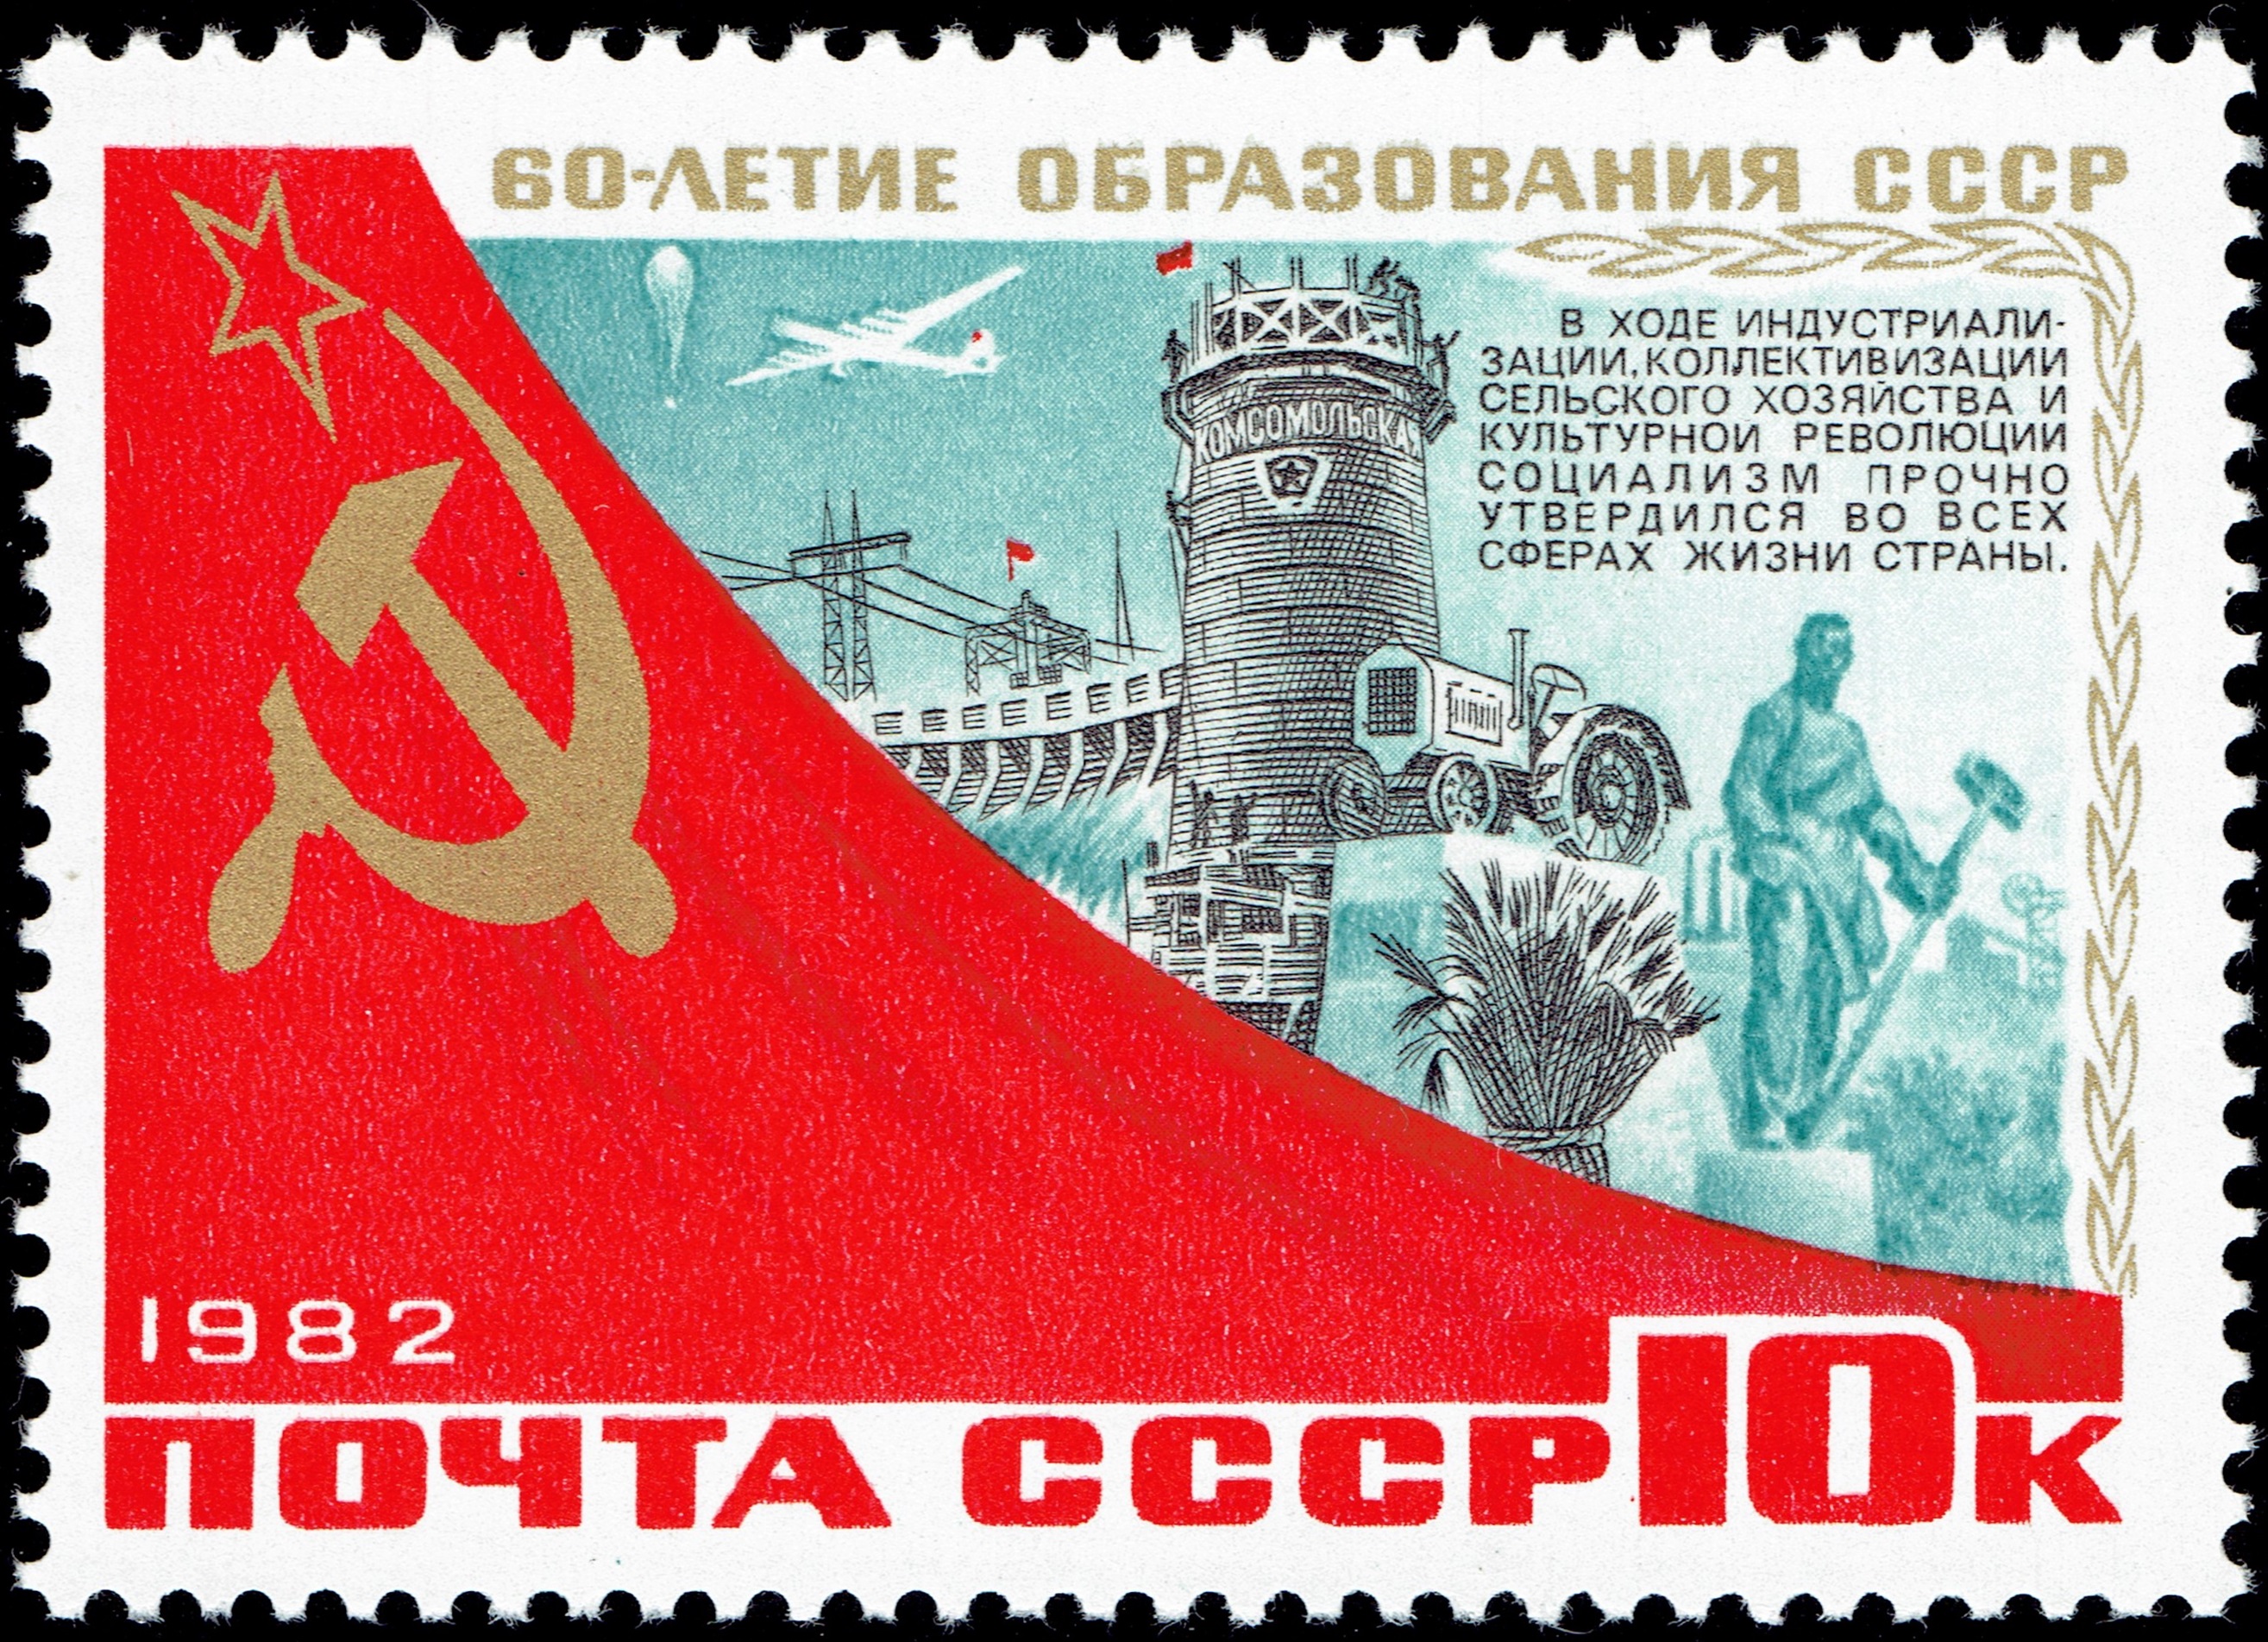 Union of Soviet Socialist Republics - Scott #5092 (1982): Dnieper Dam, Komosomol Monument, statue of worker